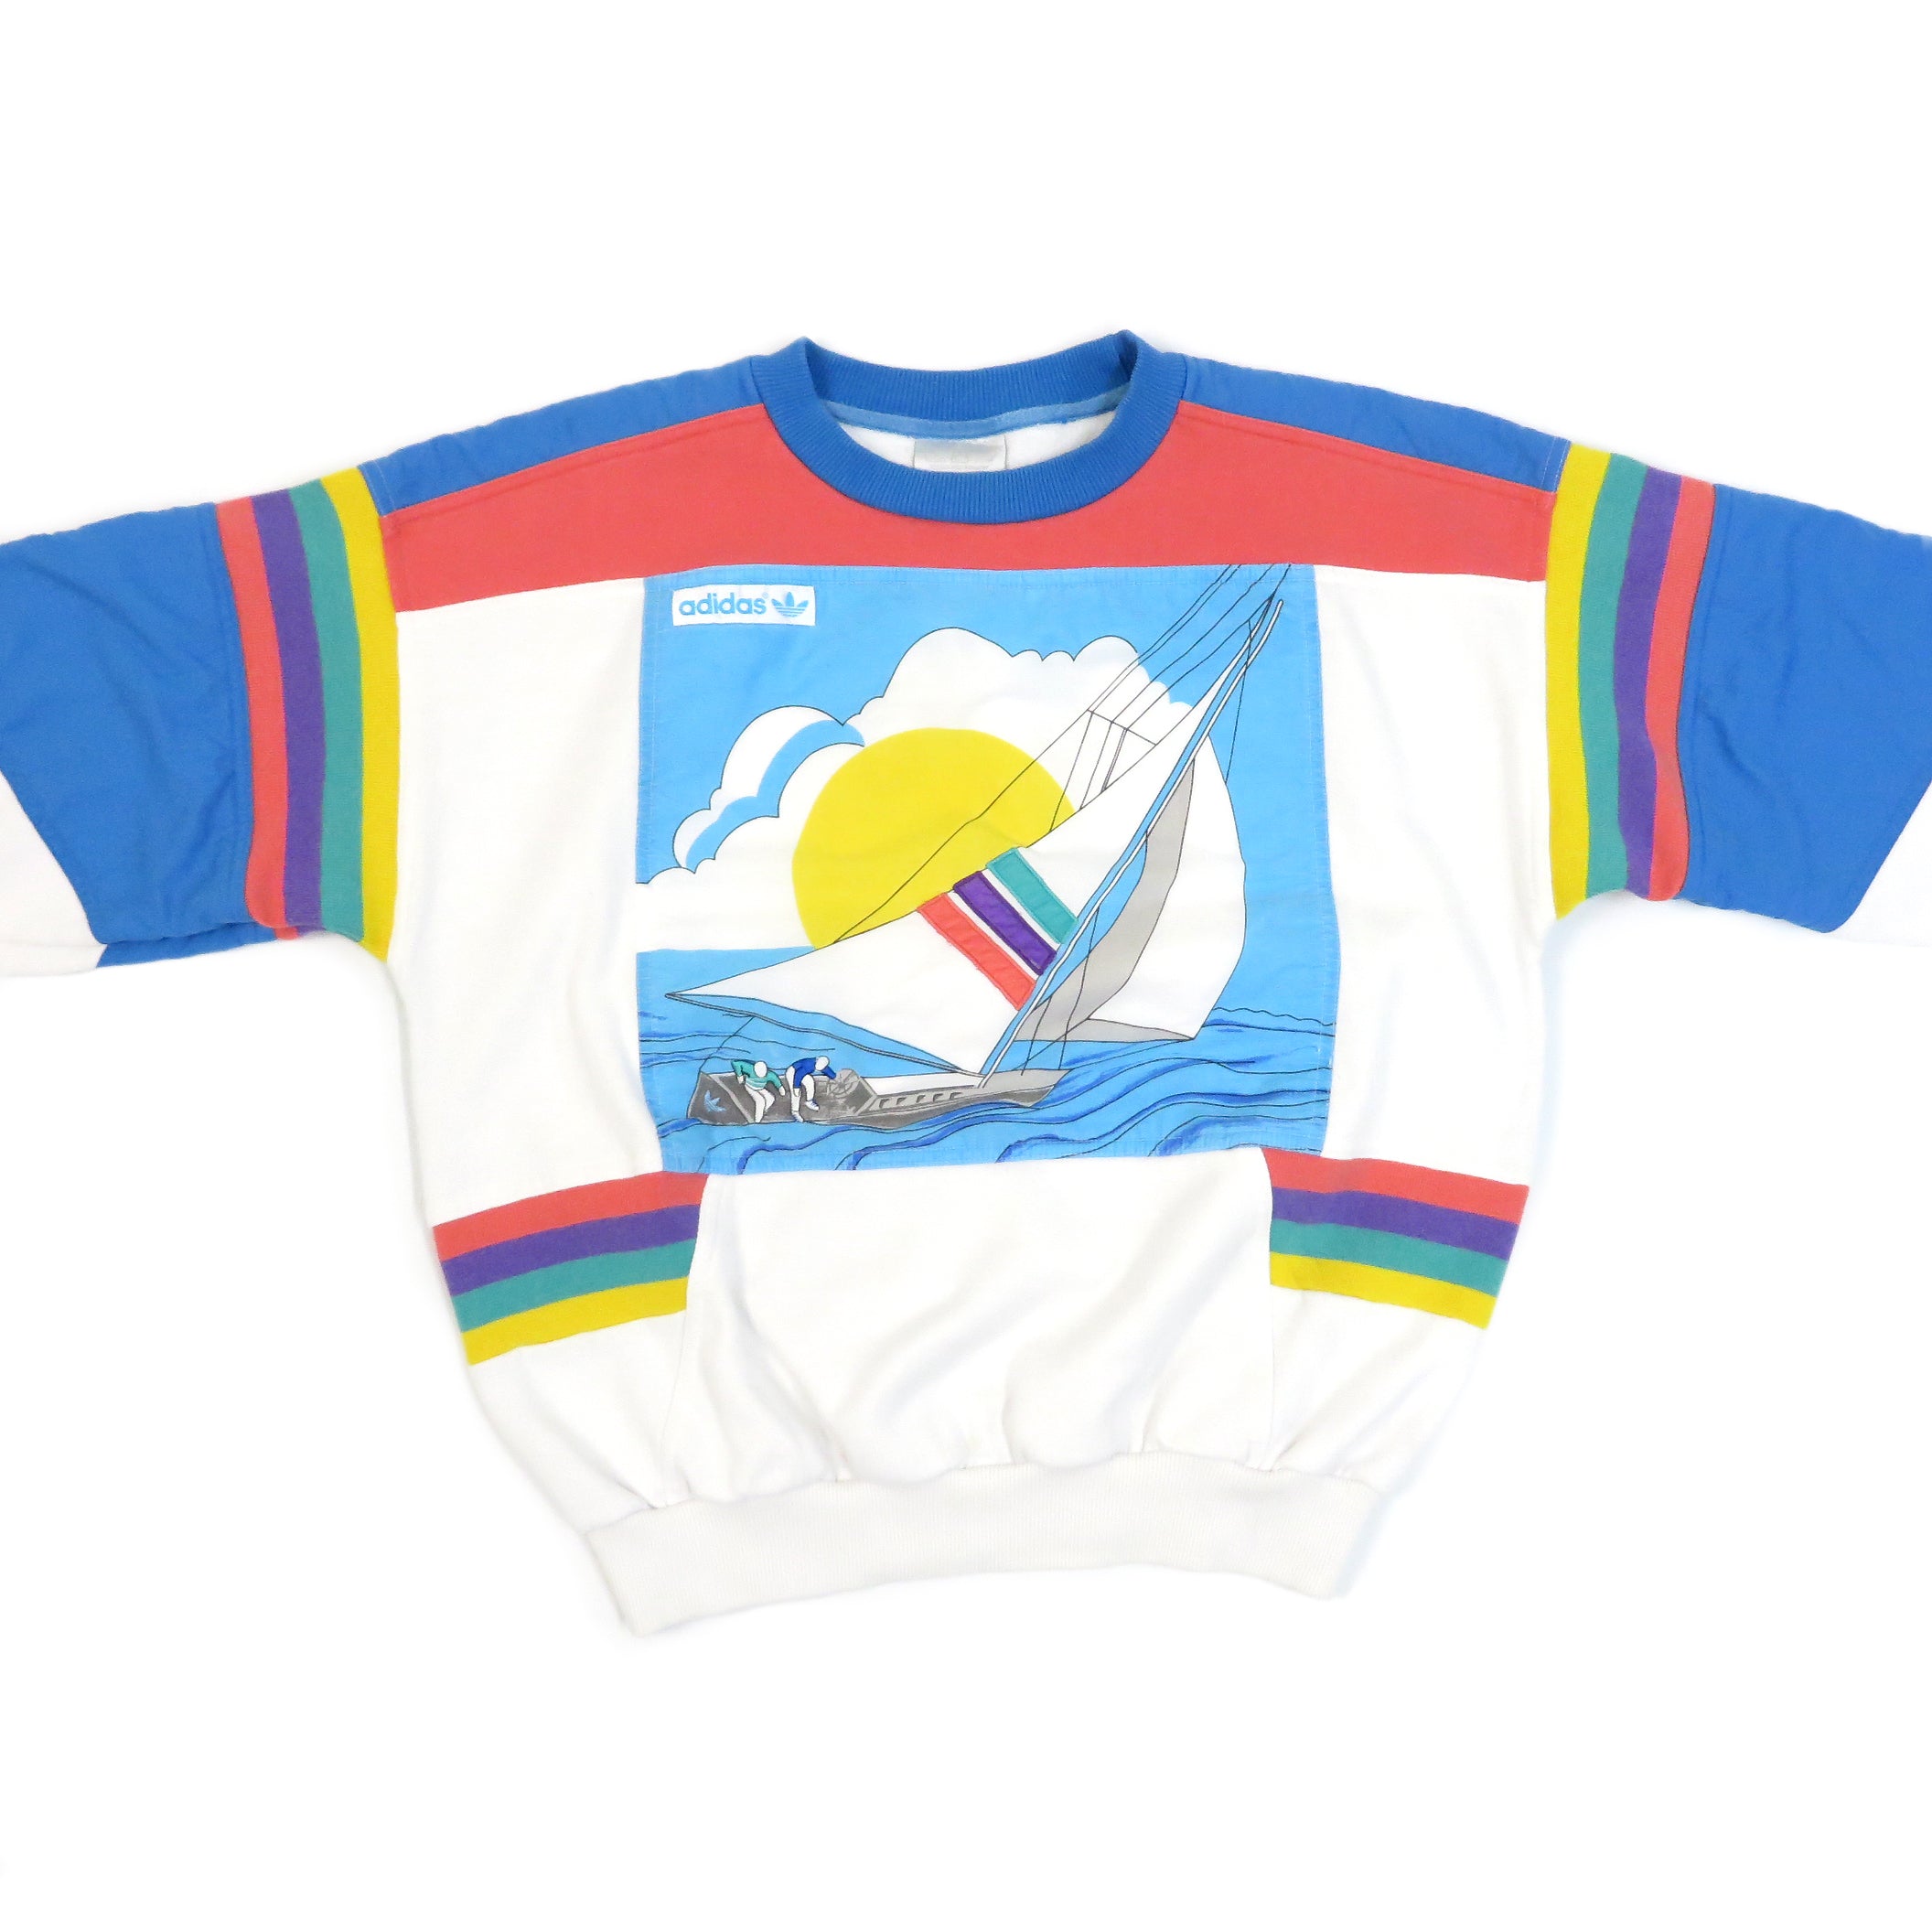 Vintage Adidas Regatta Sailing Crewneck Sweatshirt Sz M